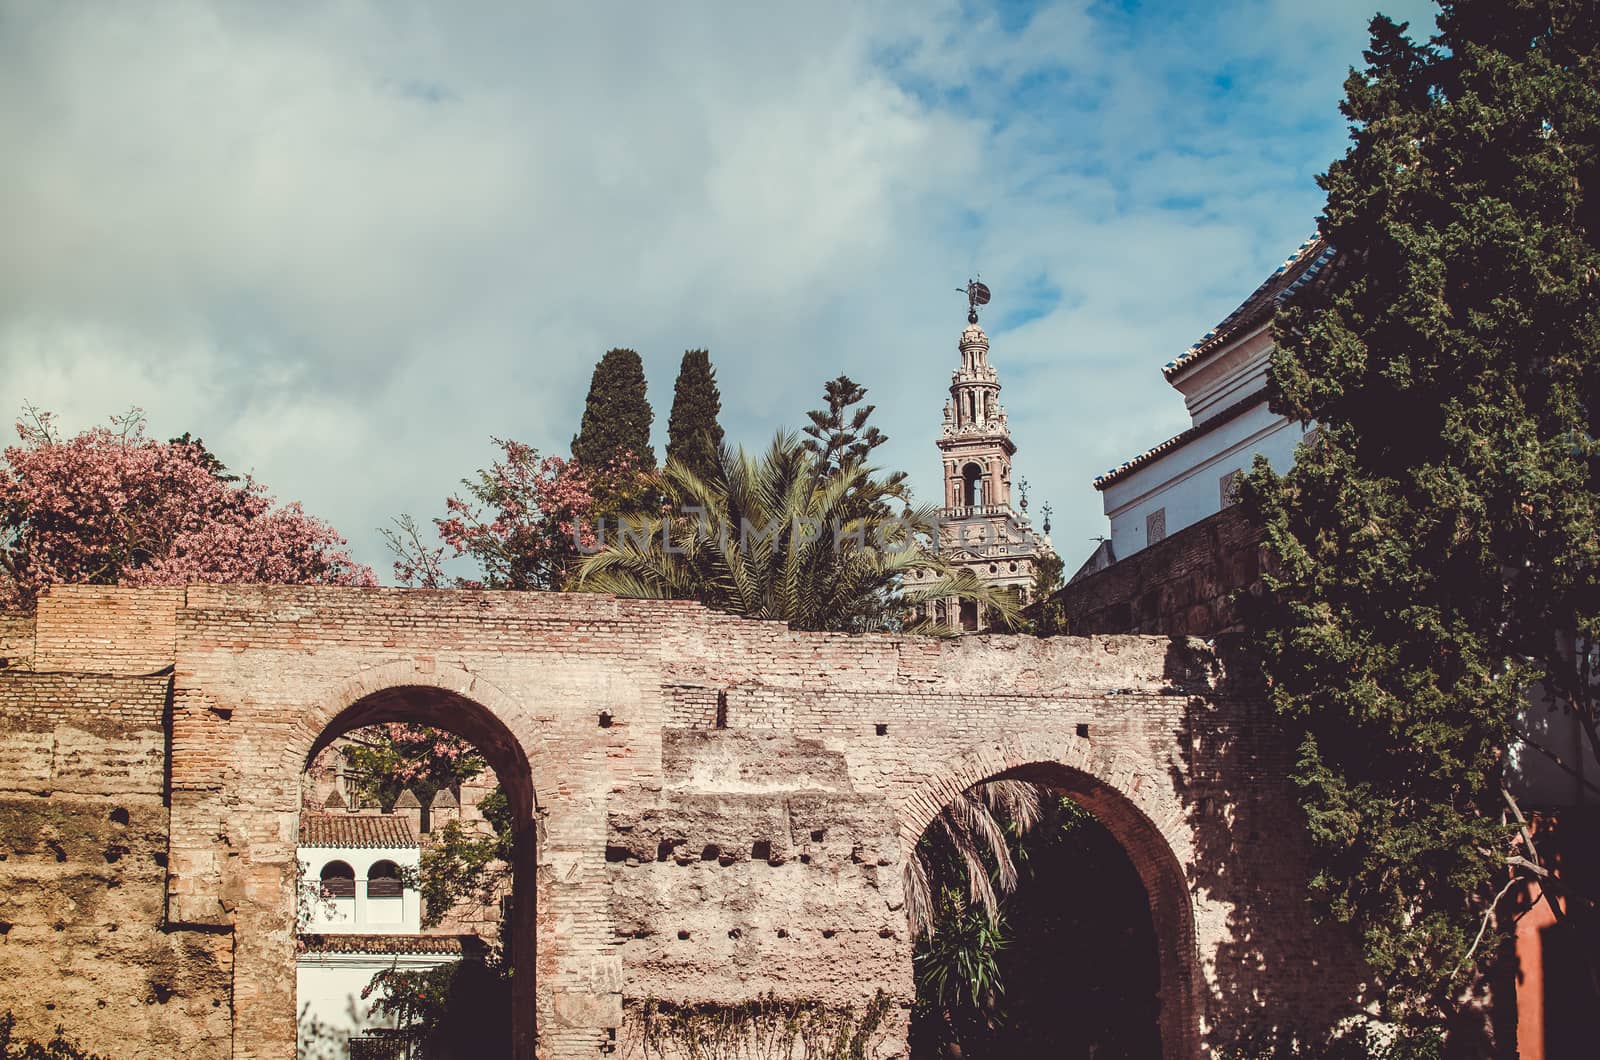 The Giralda tower from Alcazar of Sevilla by mikelju